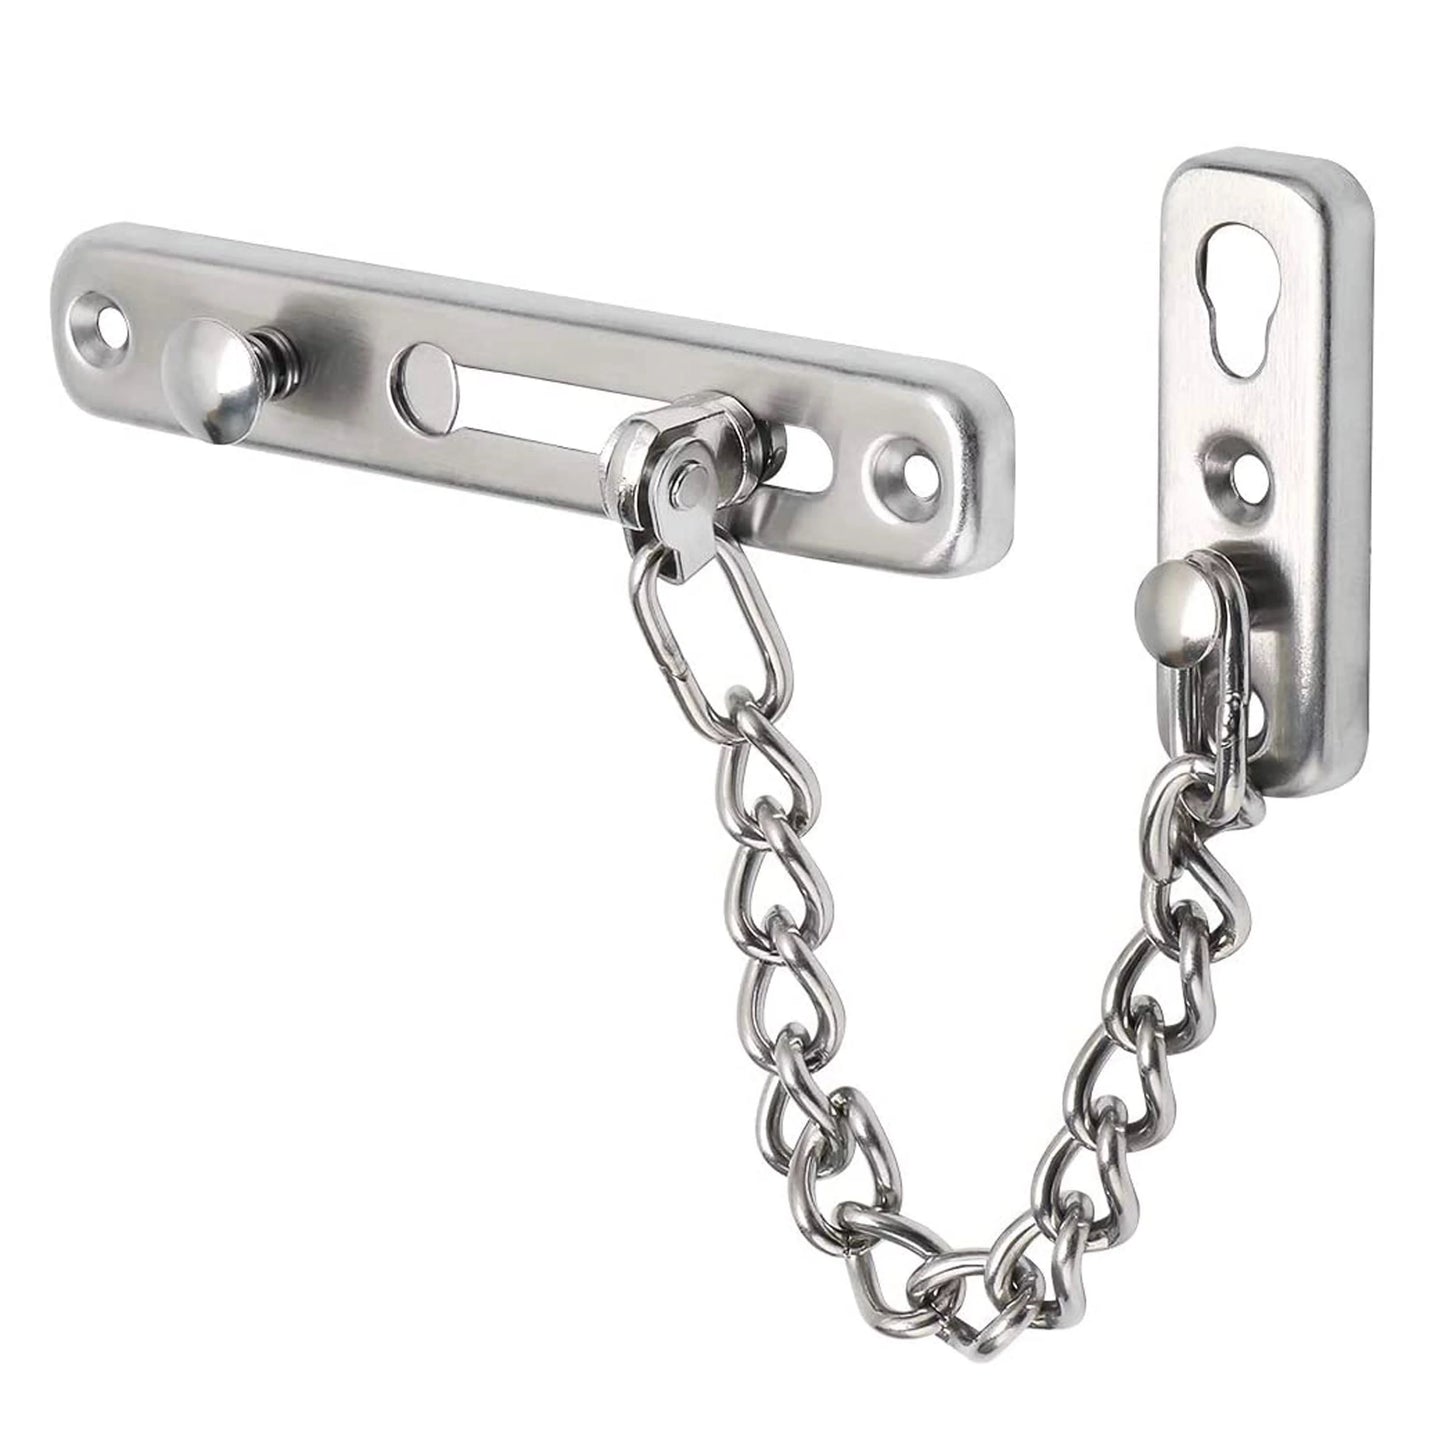 Heavy Duty Door Chain Restrictor Latch Bolt Slide Guard Home Security Lock device